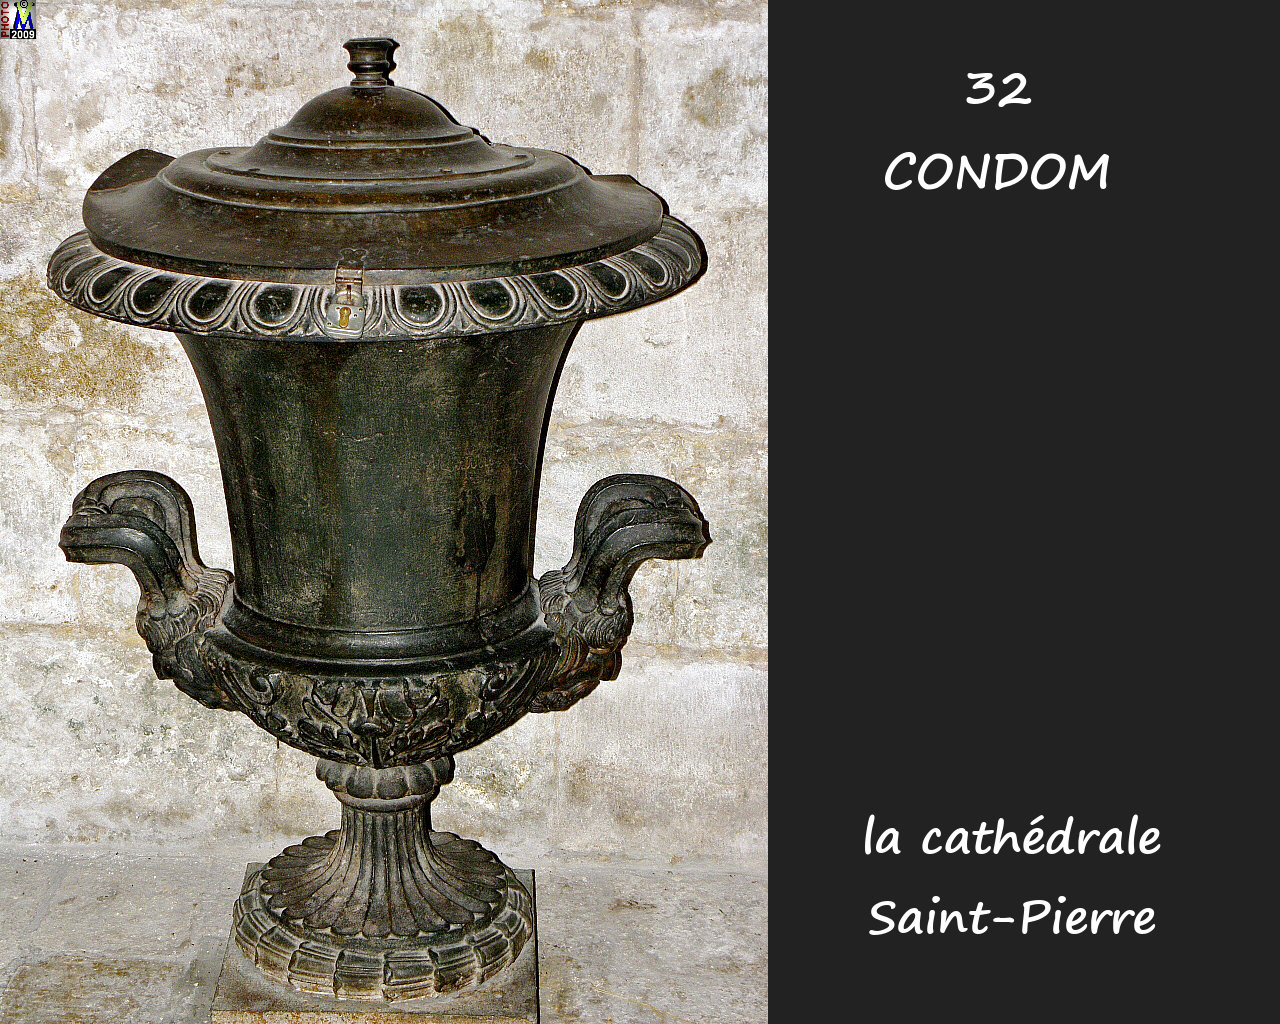 32CONDOM_cathedrale_272.jpg